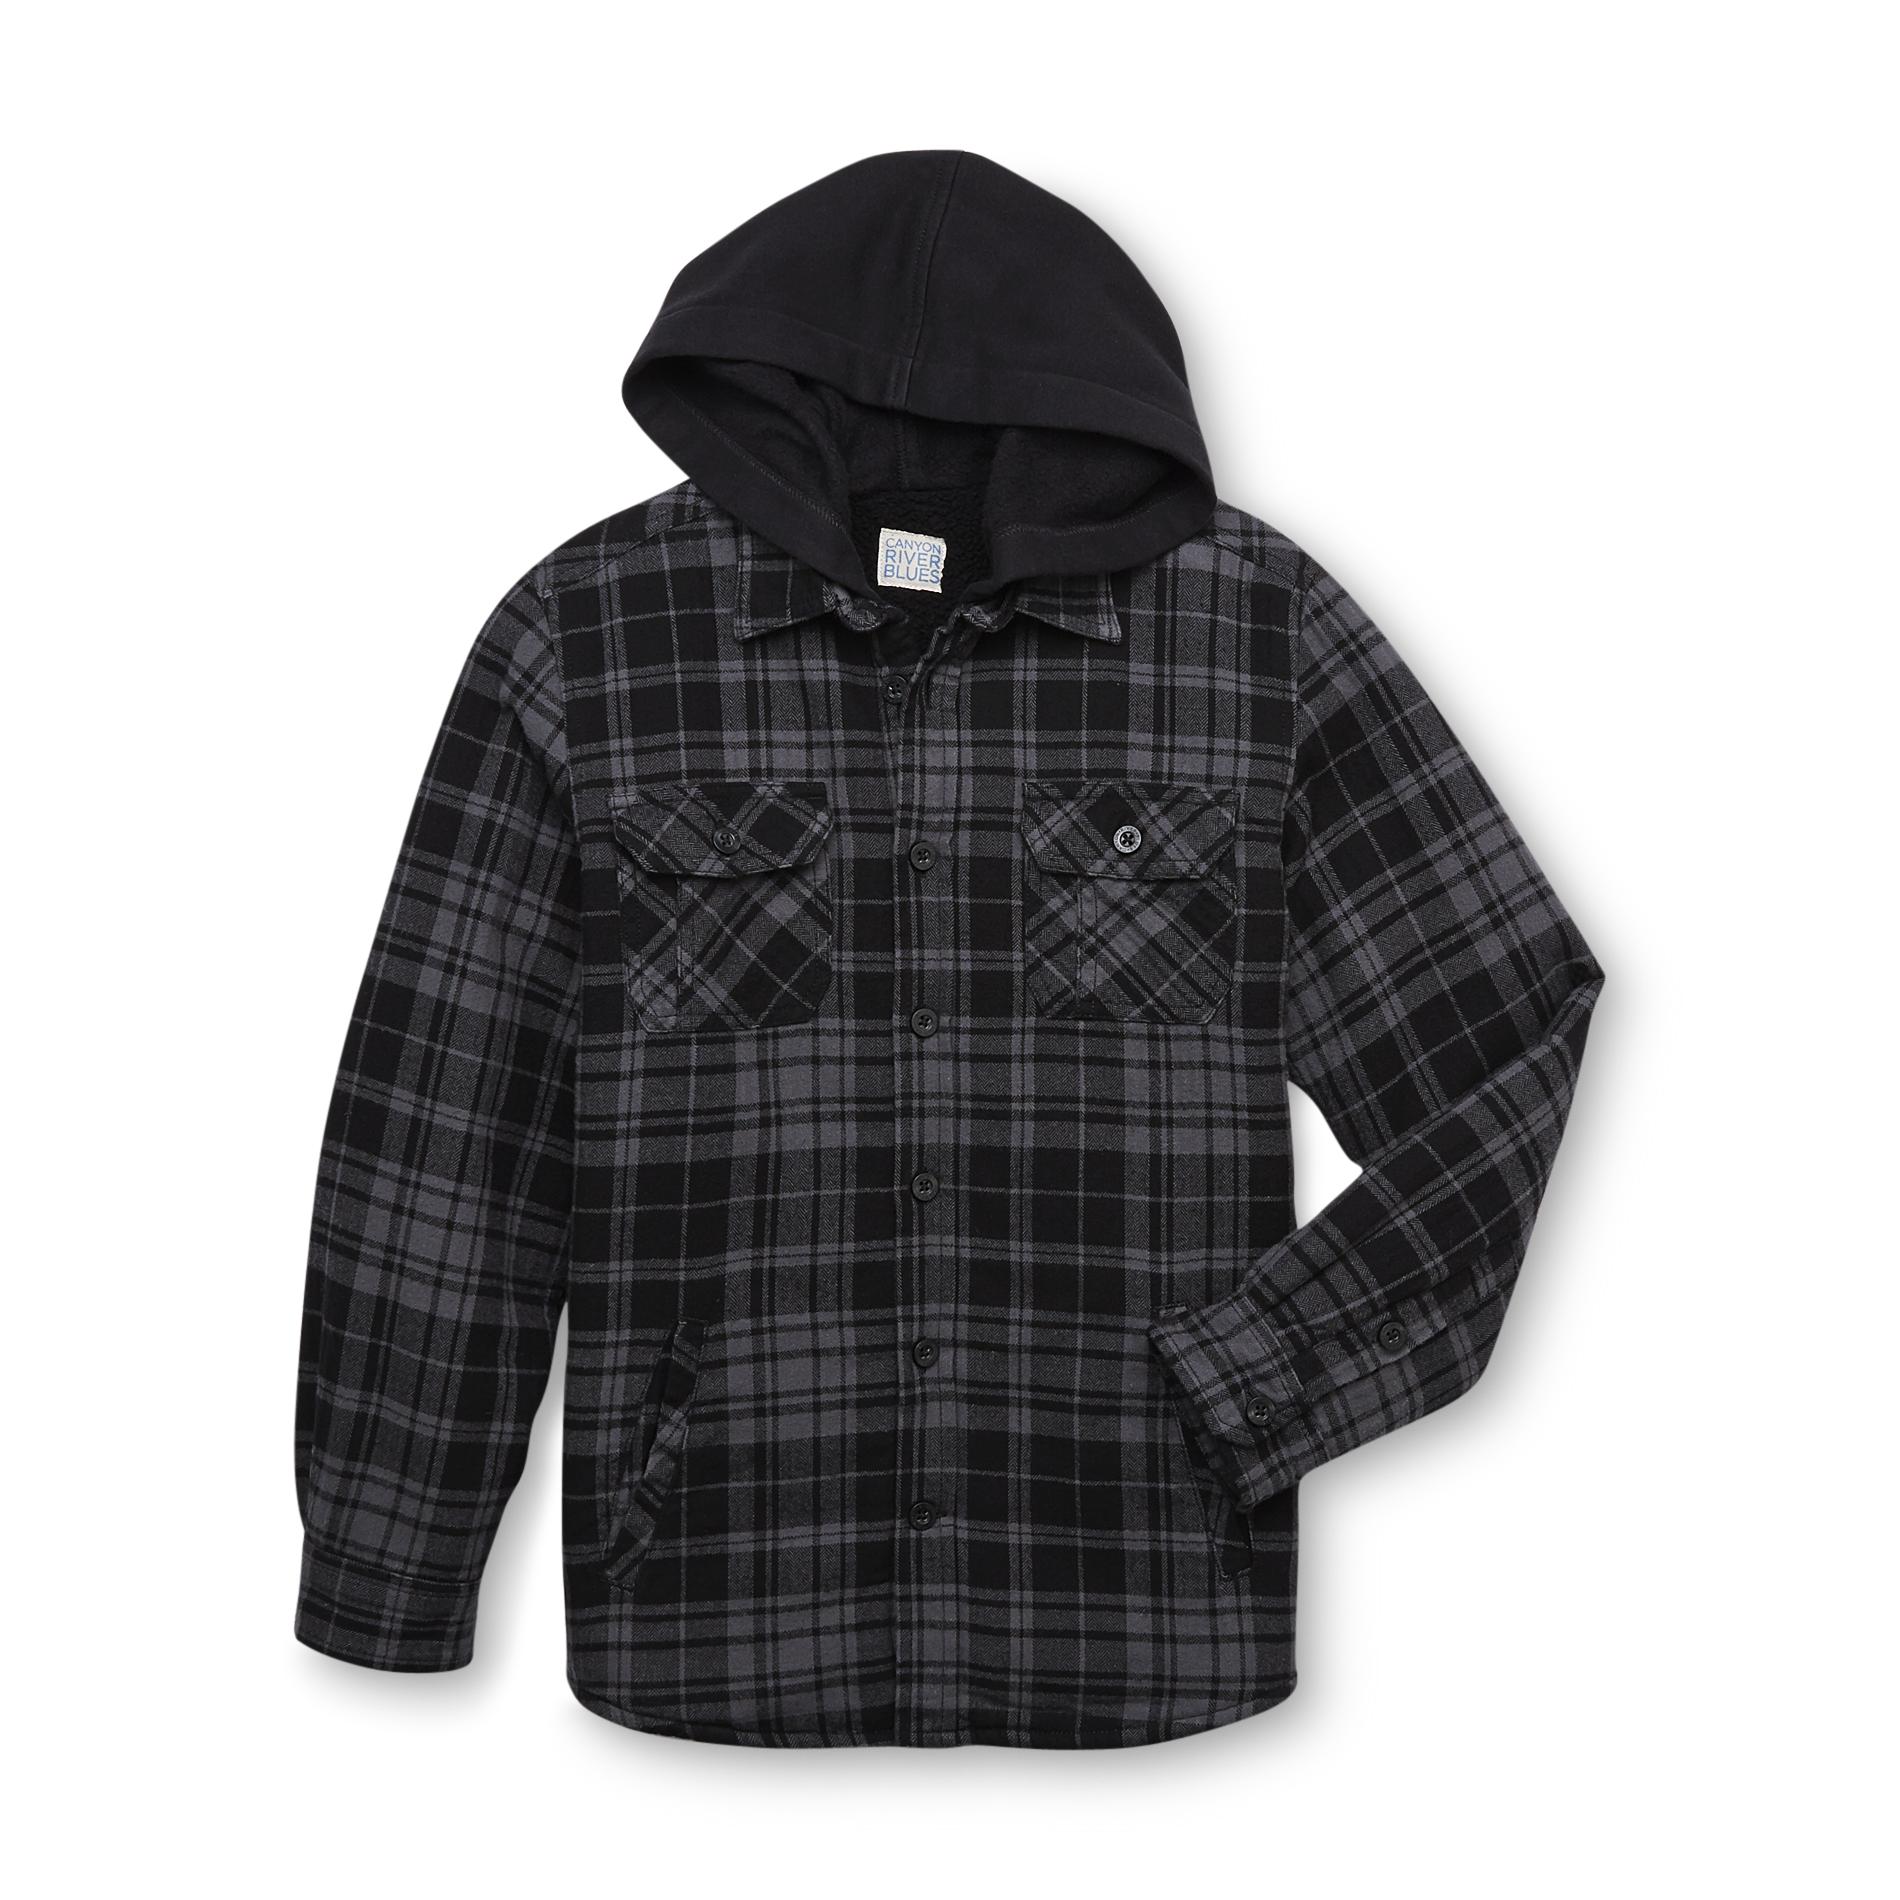 Canyon River Blues Boy's Hooded Shirt Jacket - Plaid